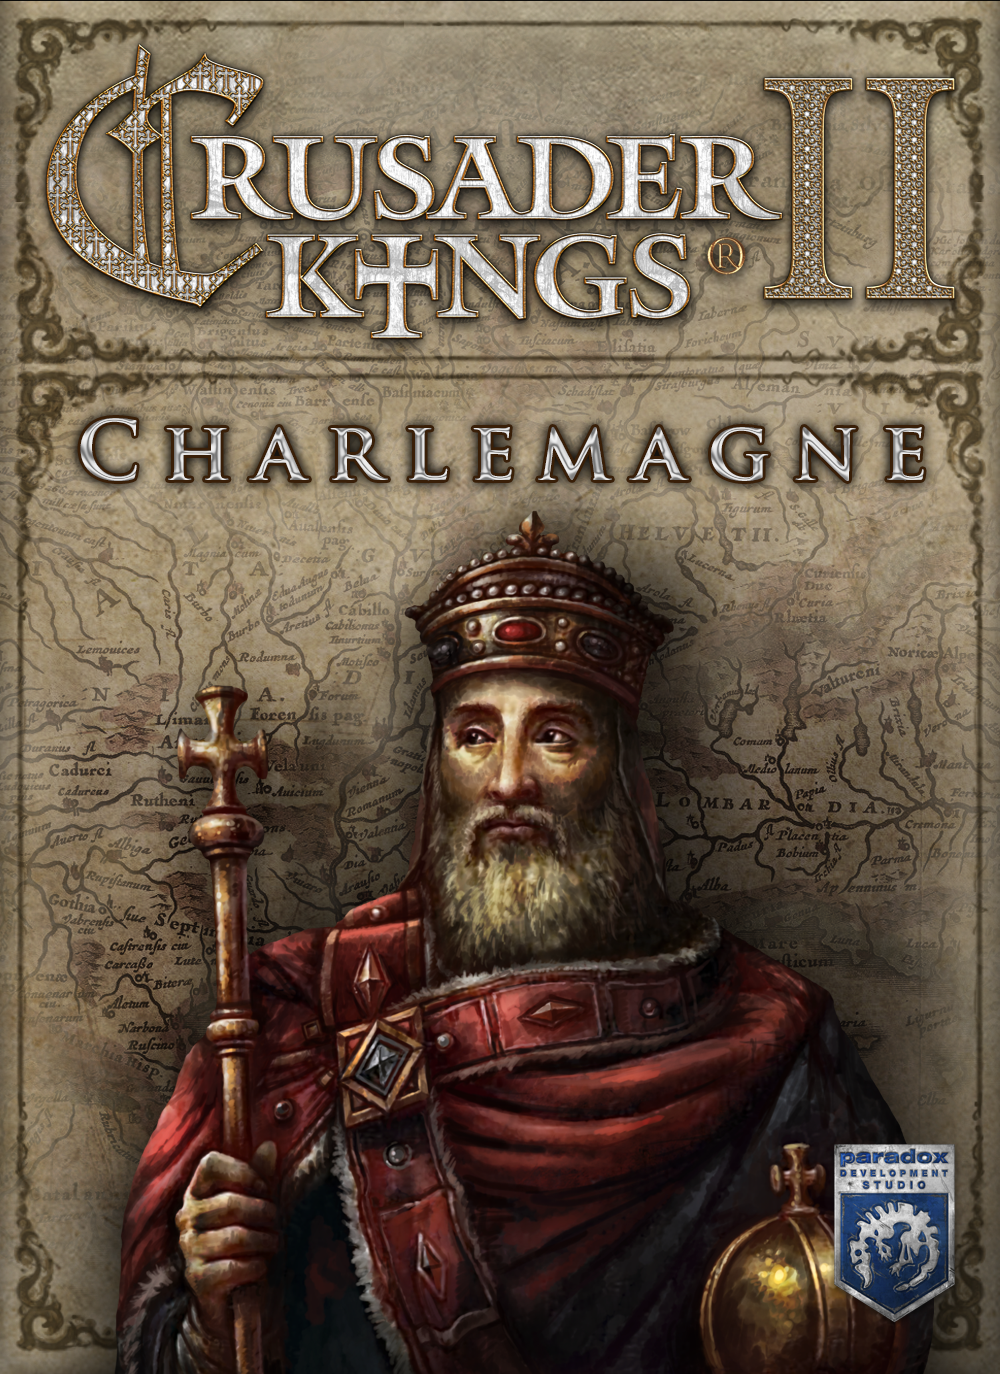 charlemagne-crusader-kings-ii-wiki-fandom-powered-by-wikia